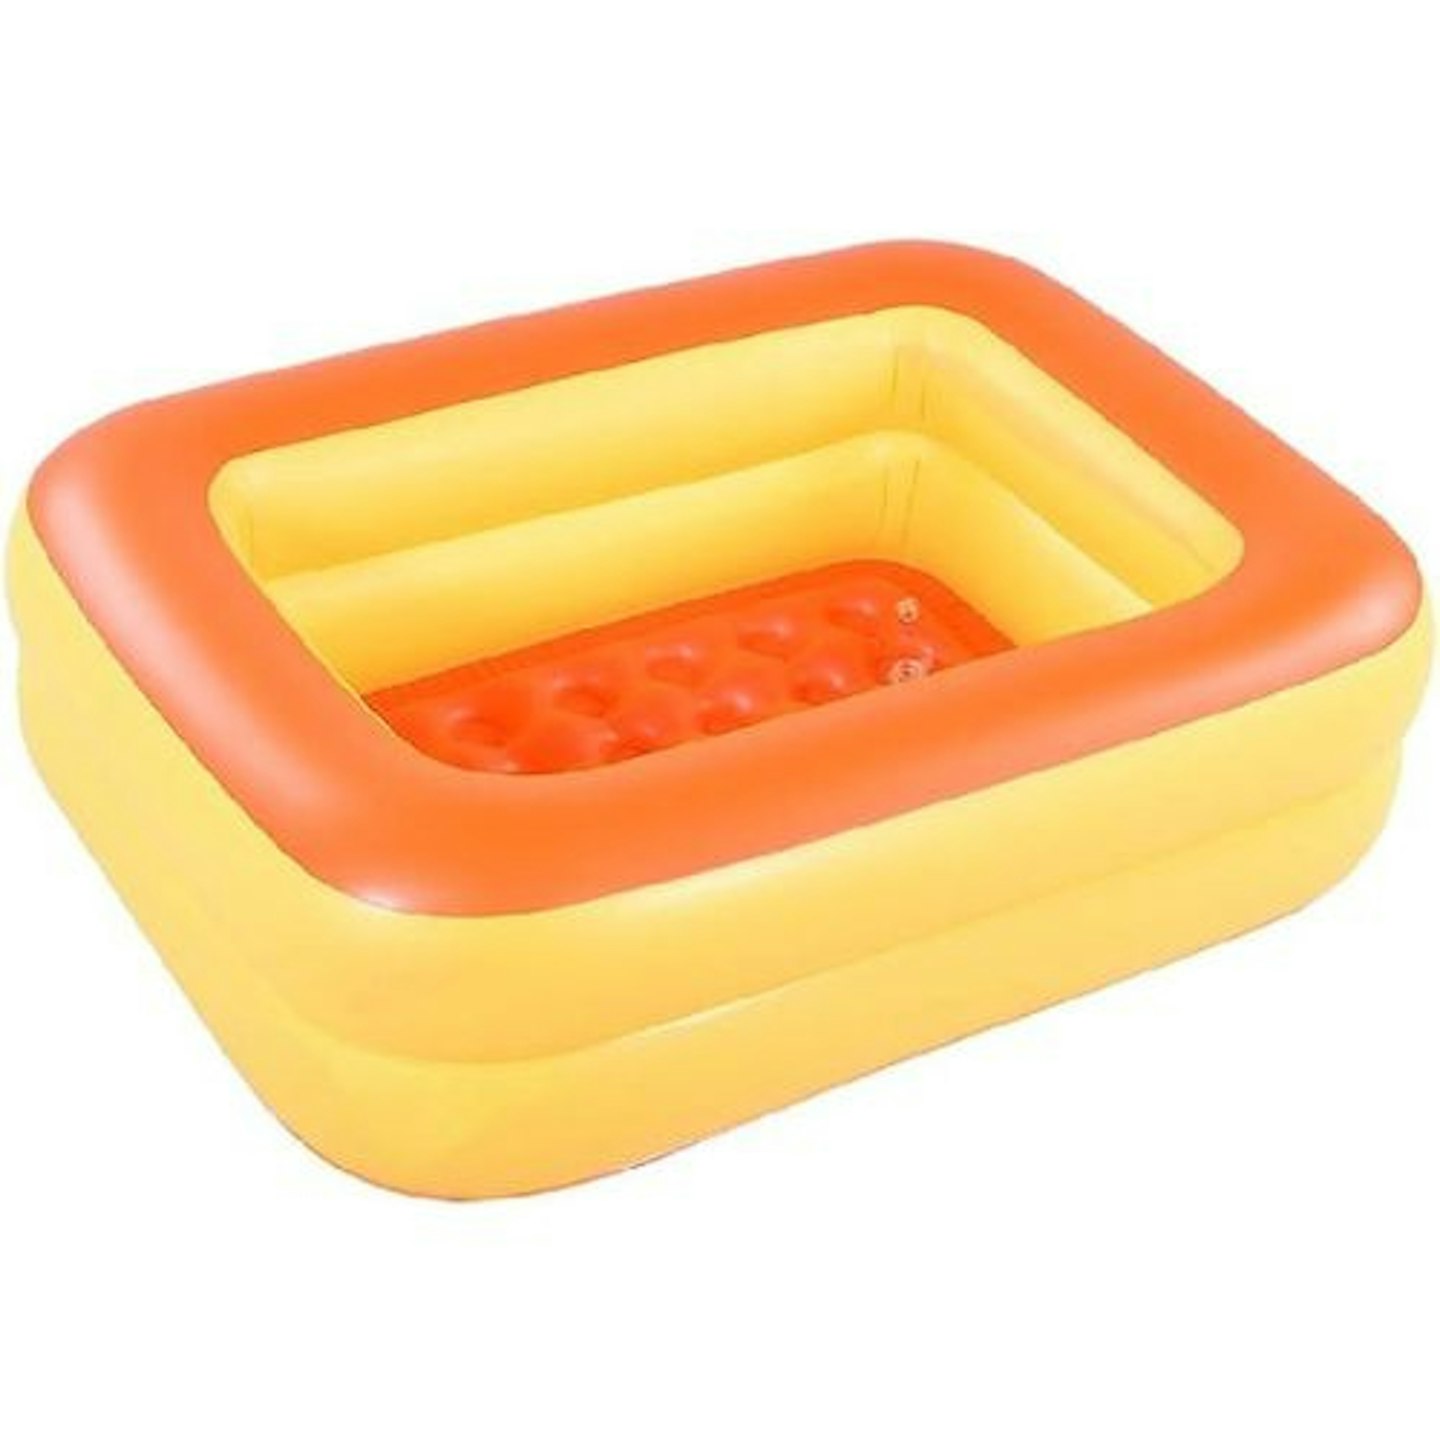 Paddling Pools And Pads : HIWENA Store - Paddling Pool, Inflatable Kiddie Pool